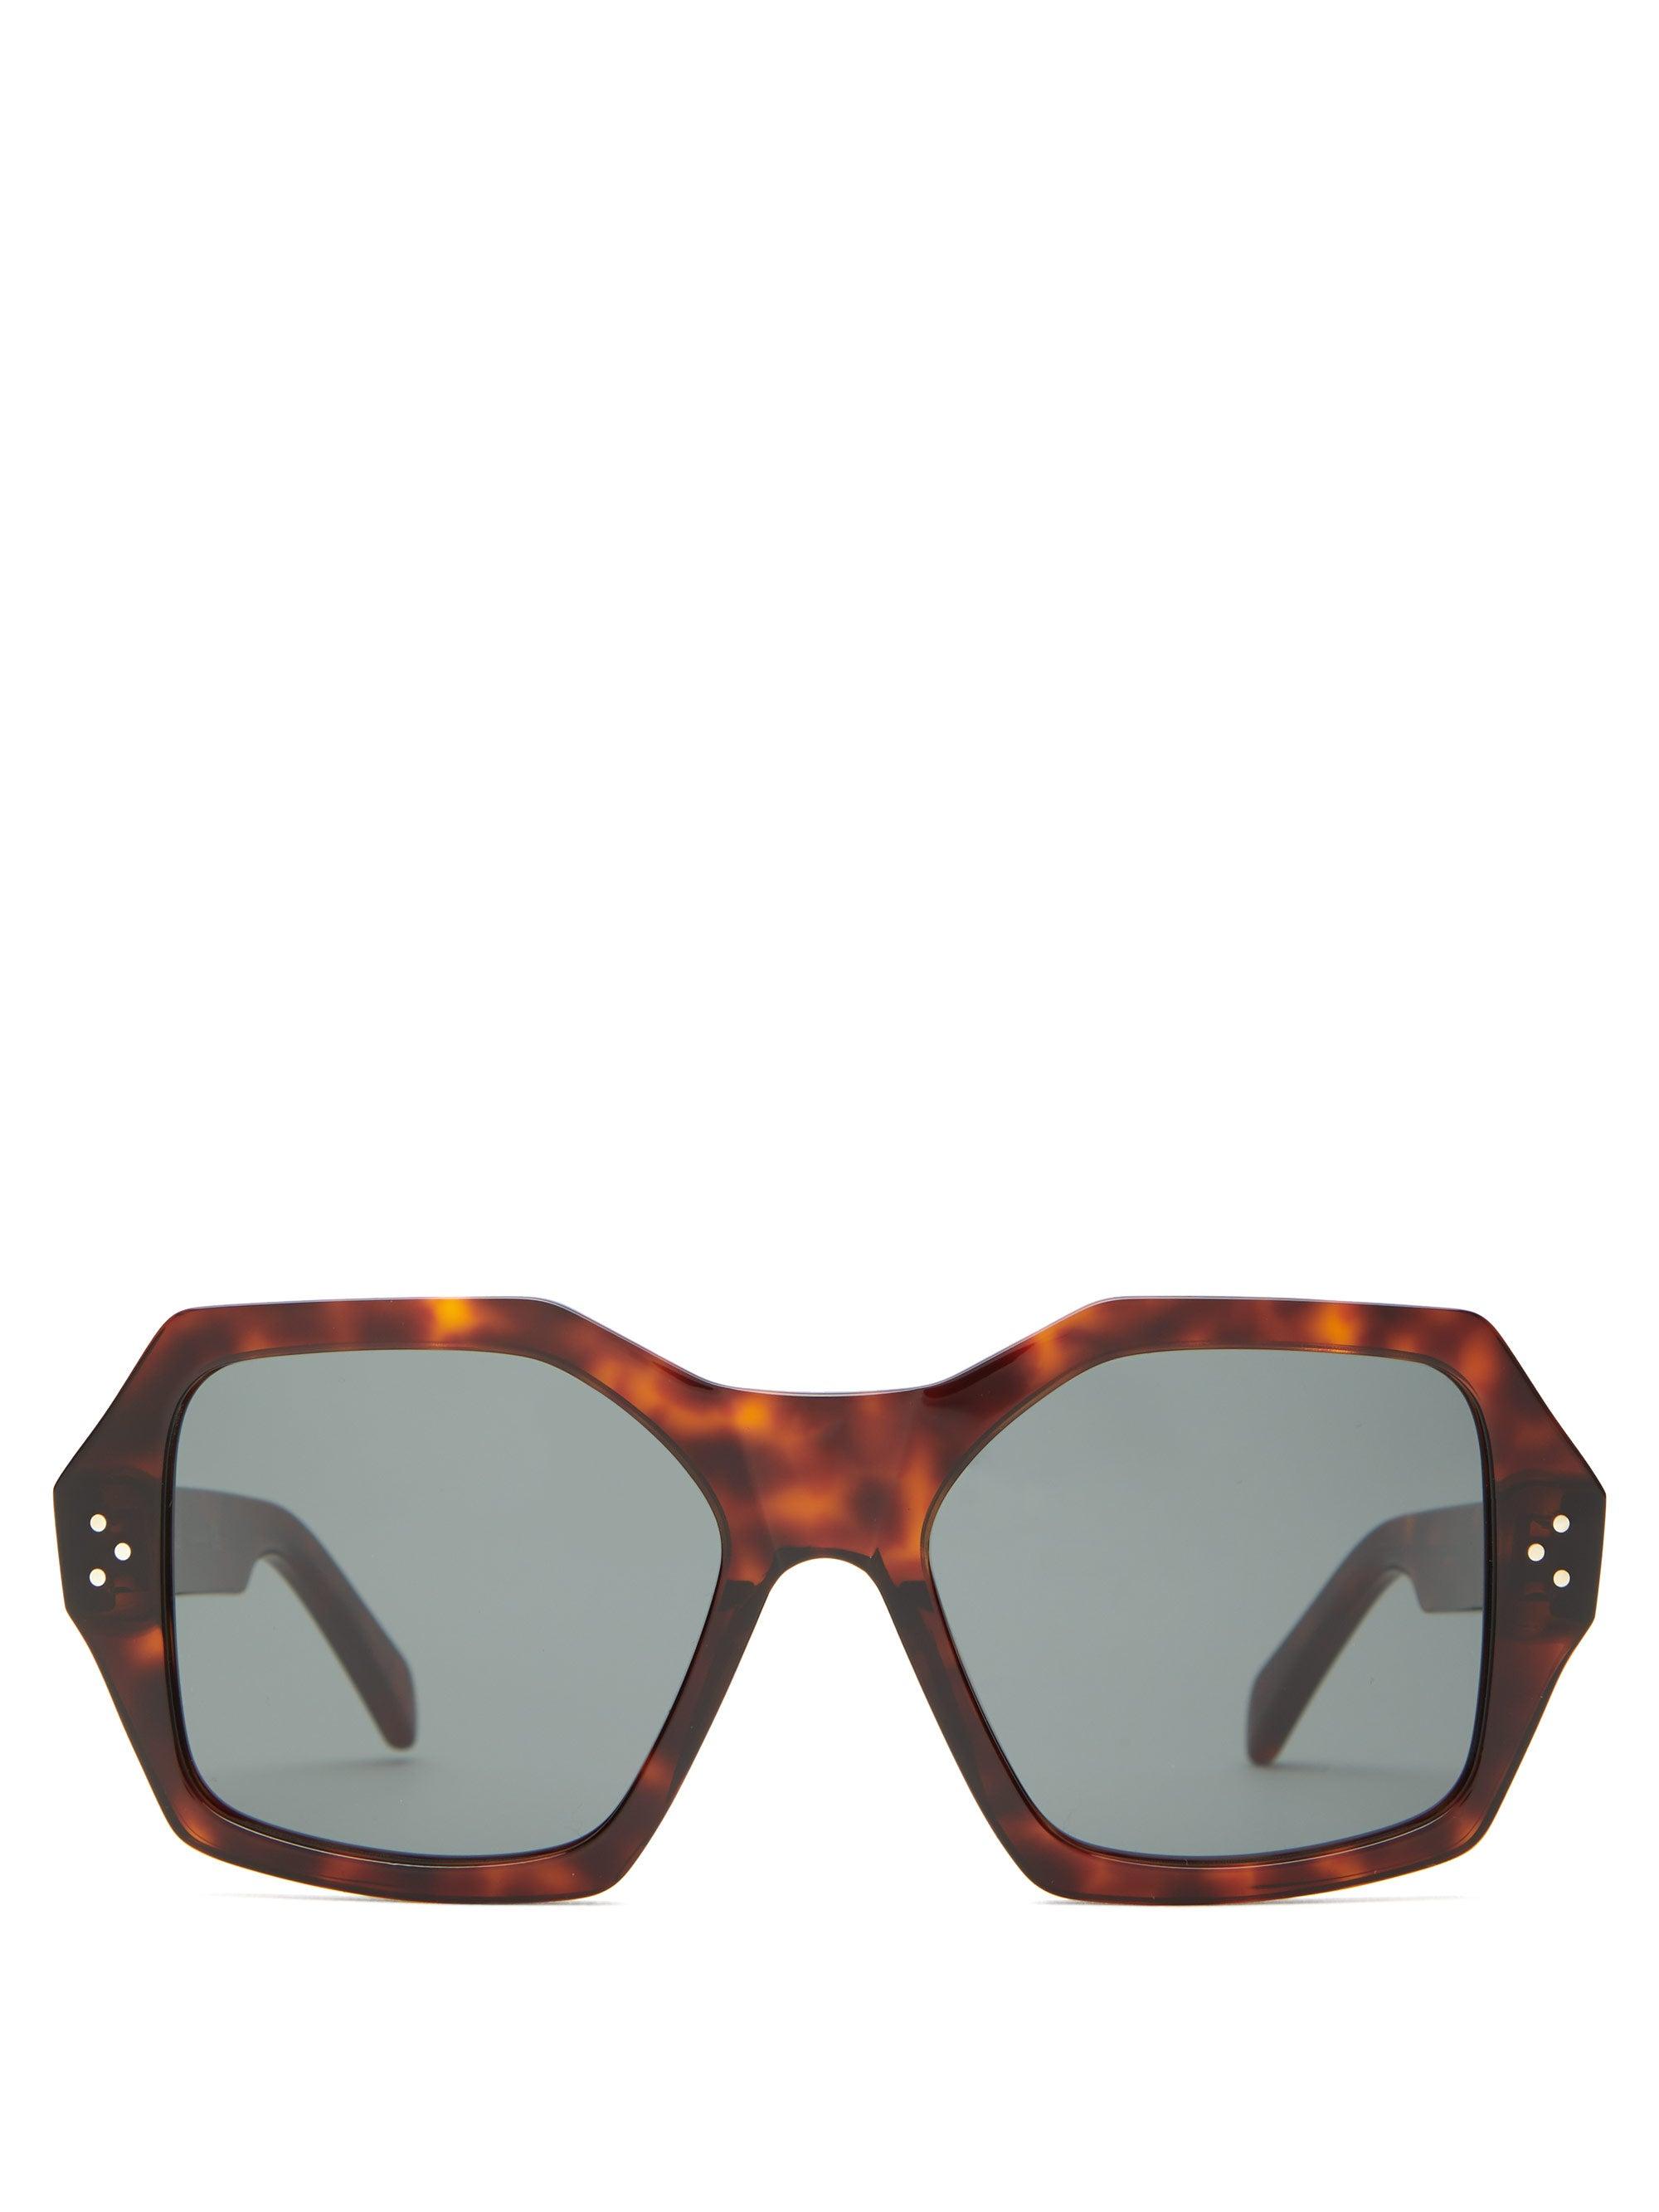 Celine Angular Square Acetate Sunglasses in Brown - Lyst